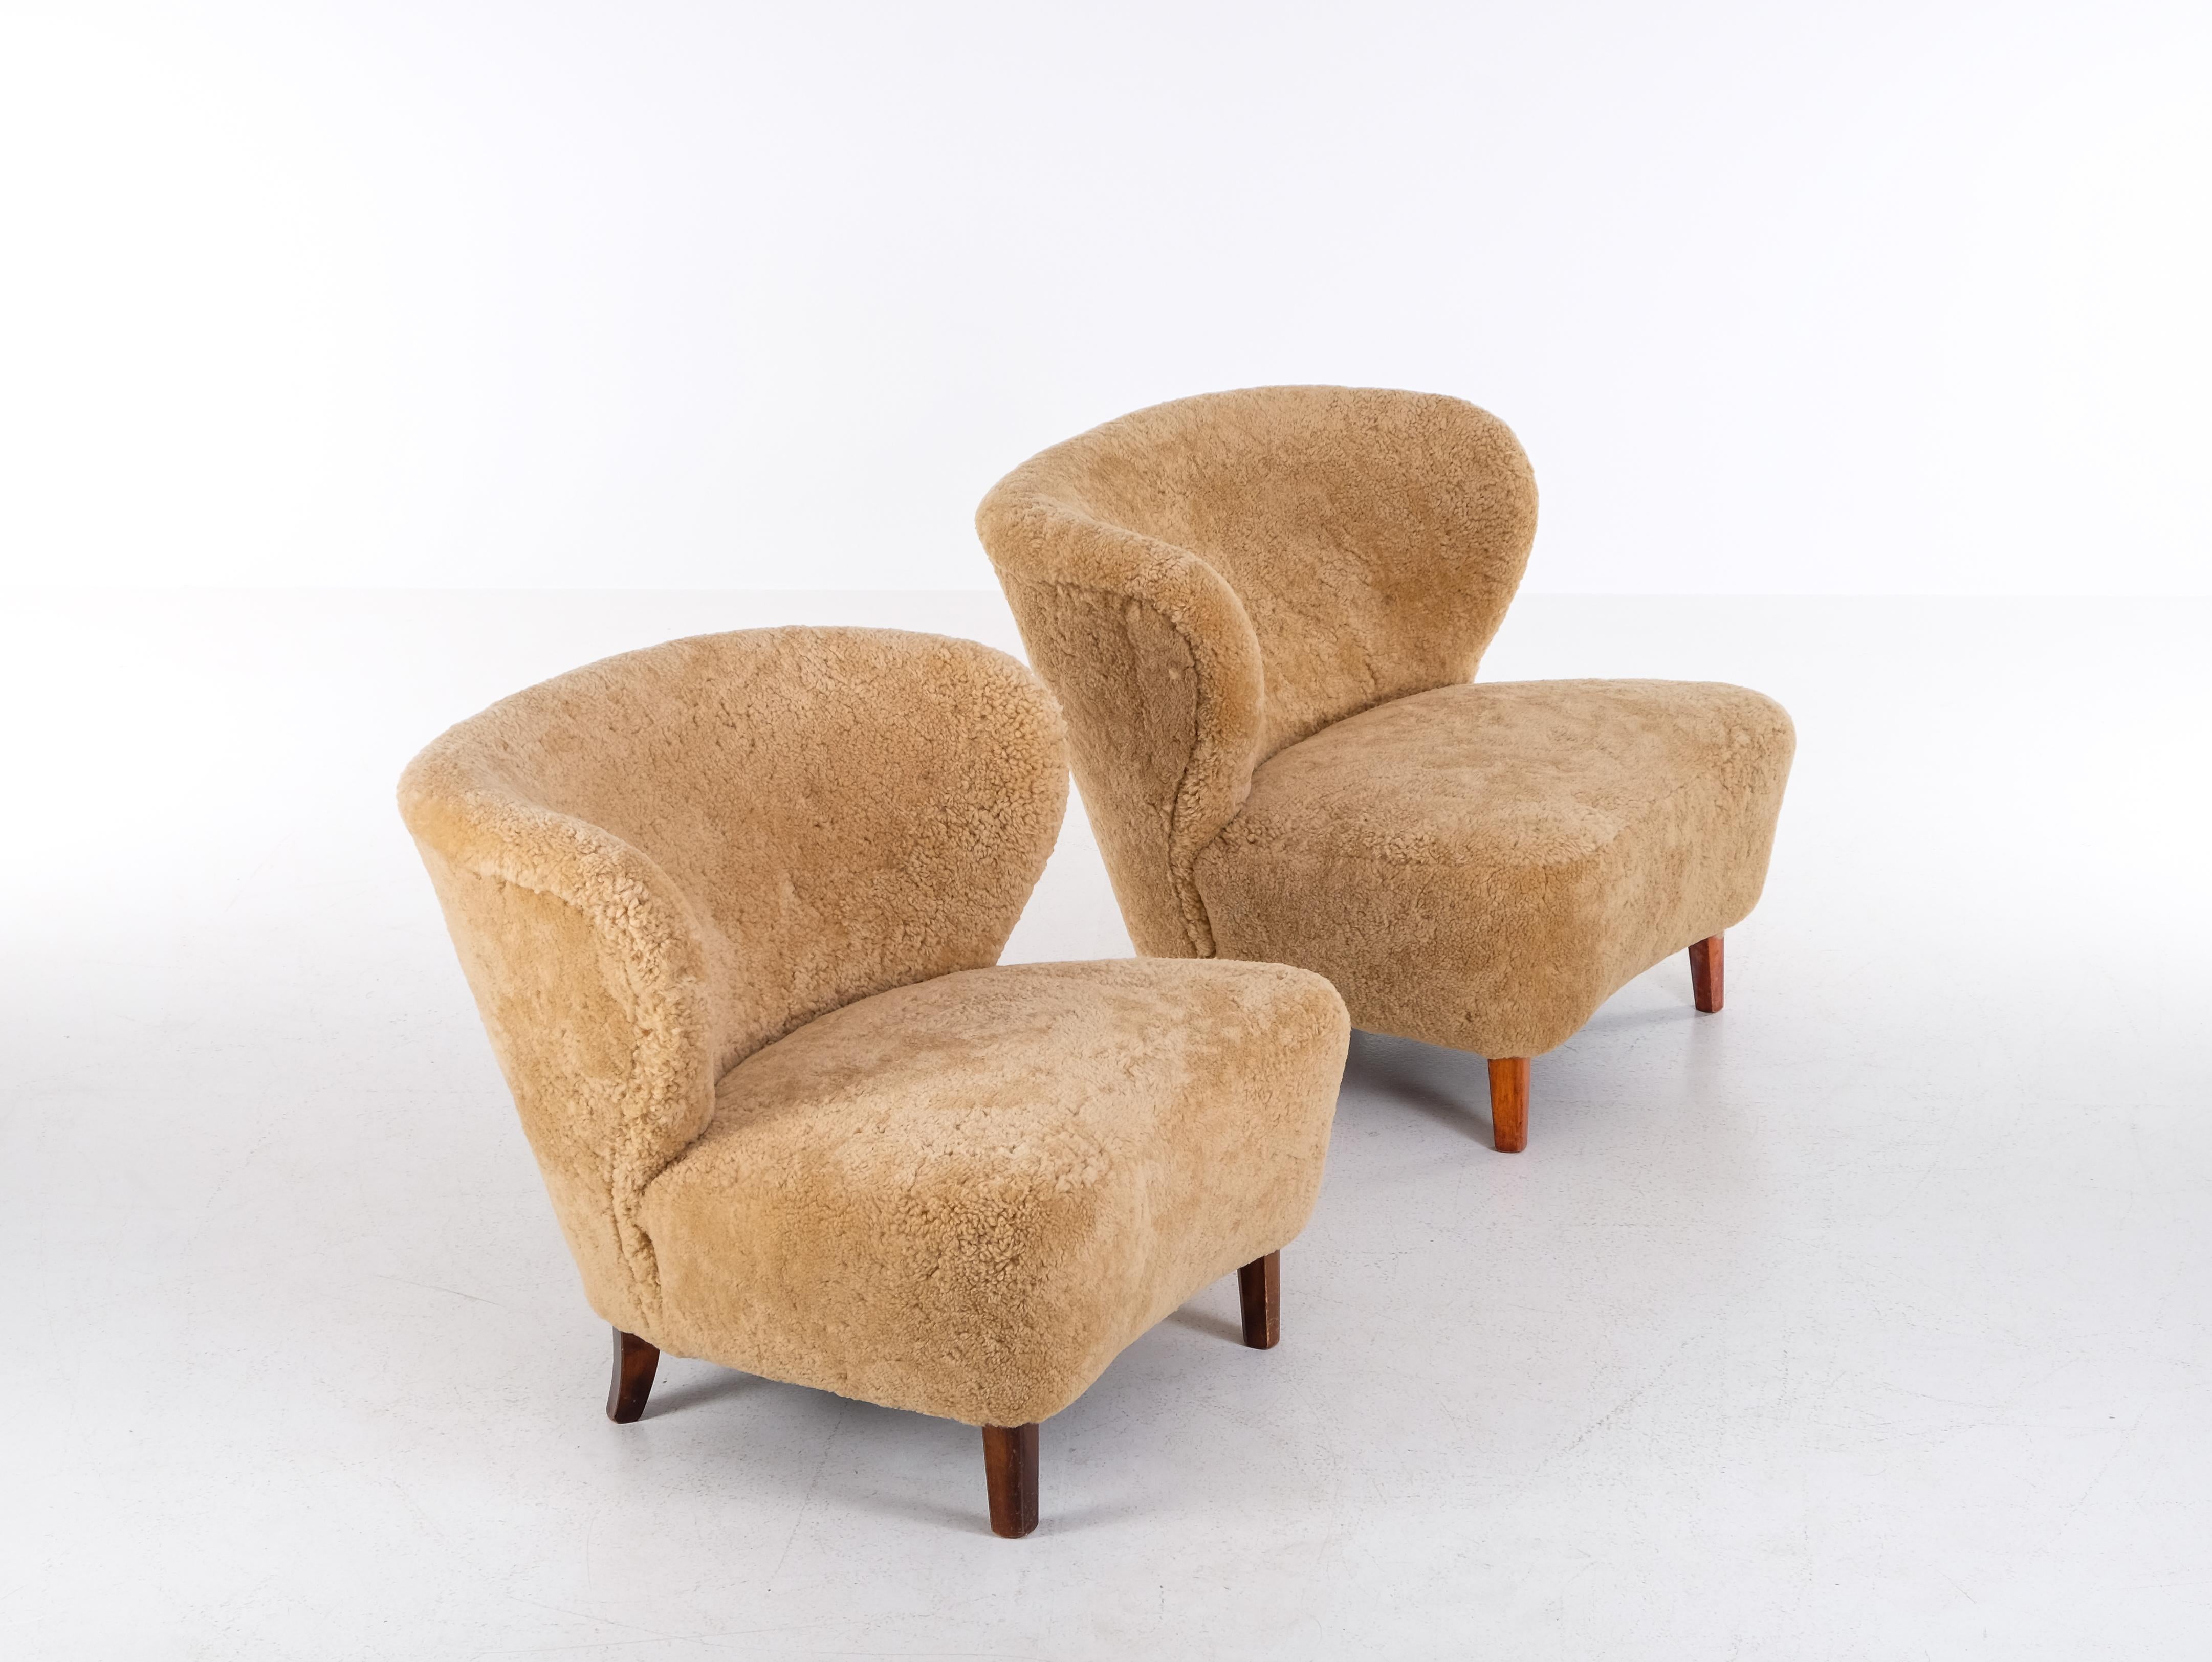 Sheepskin Pair of Easy Chairs by AB Erik Ek's Snickerifabrik, Malmö, Sweden, 1940s For Sale